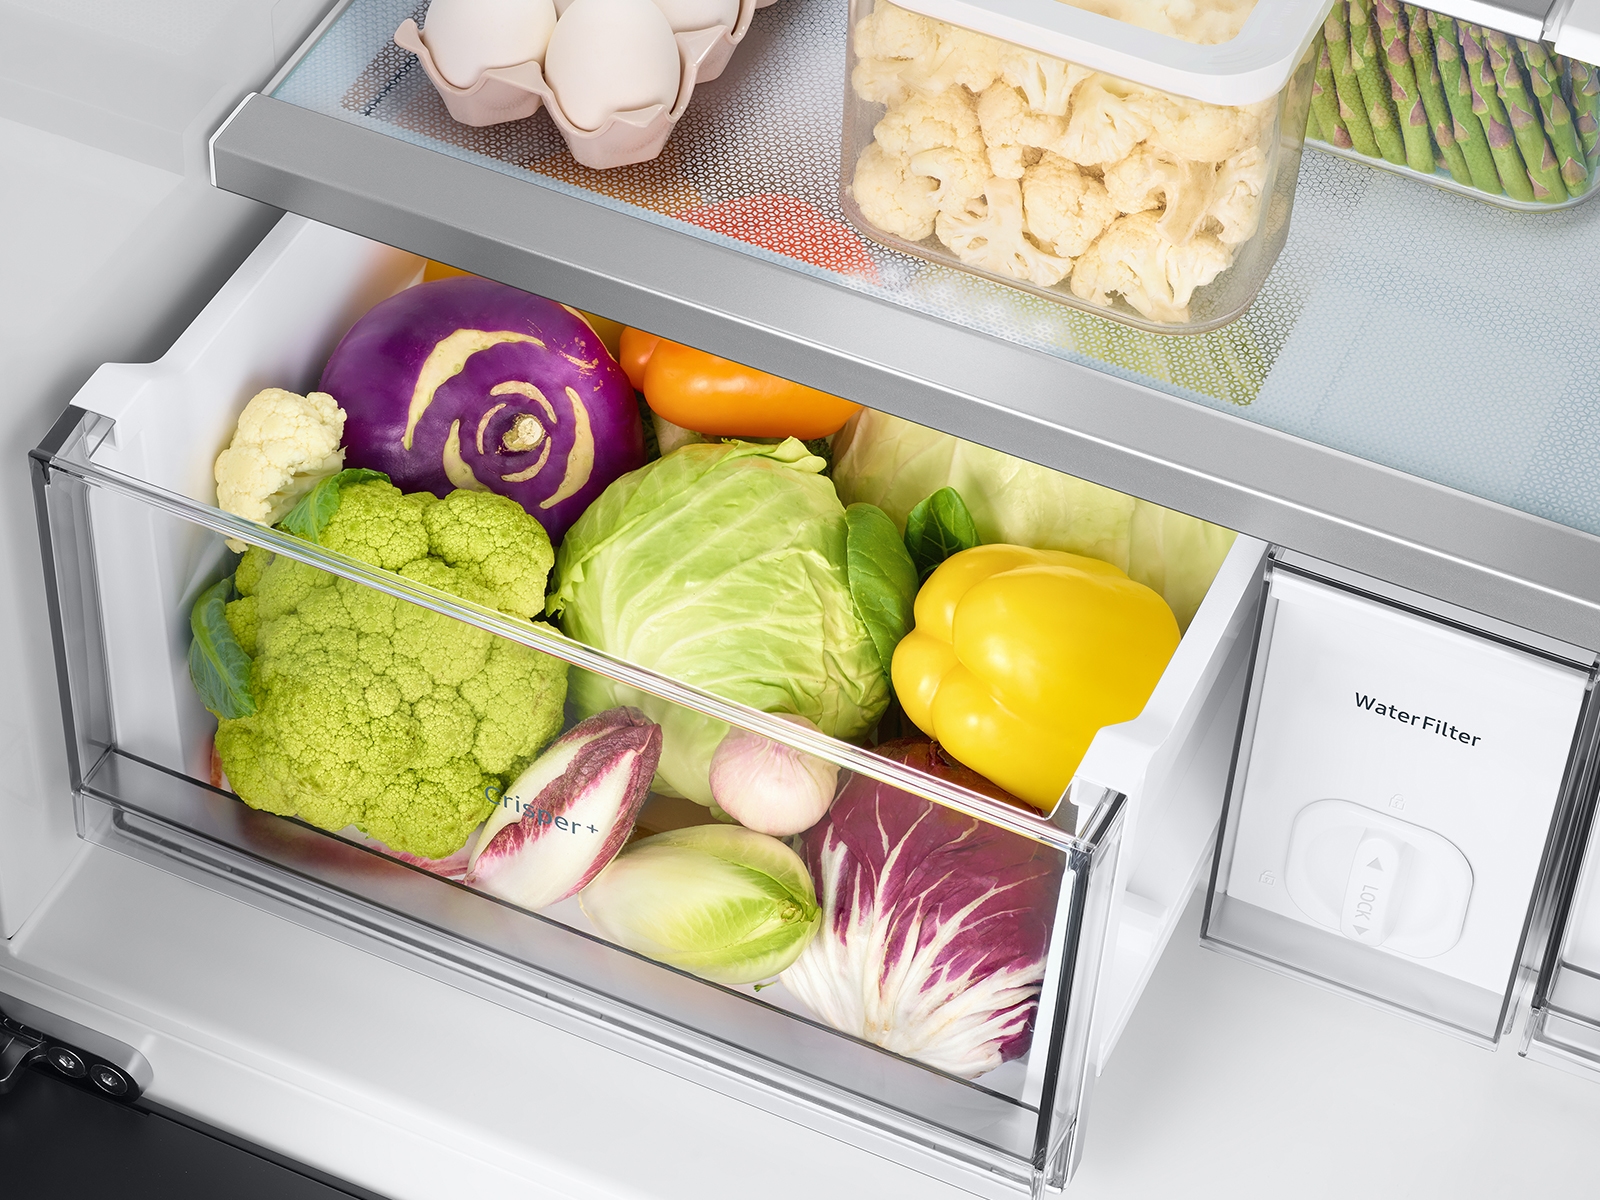 Smart Design Adjustable Pull Out Refrigerator Drawer - Extra Large - White